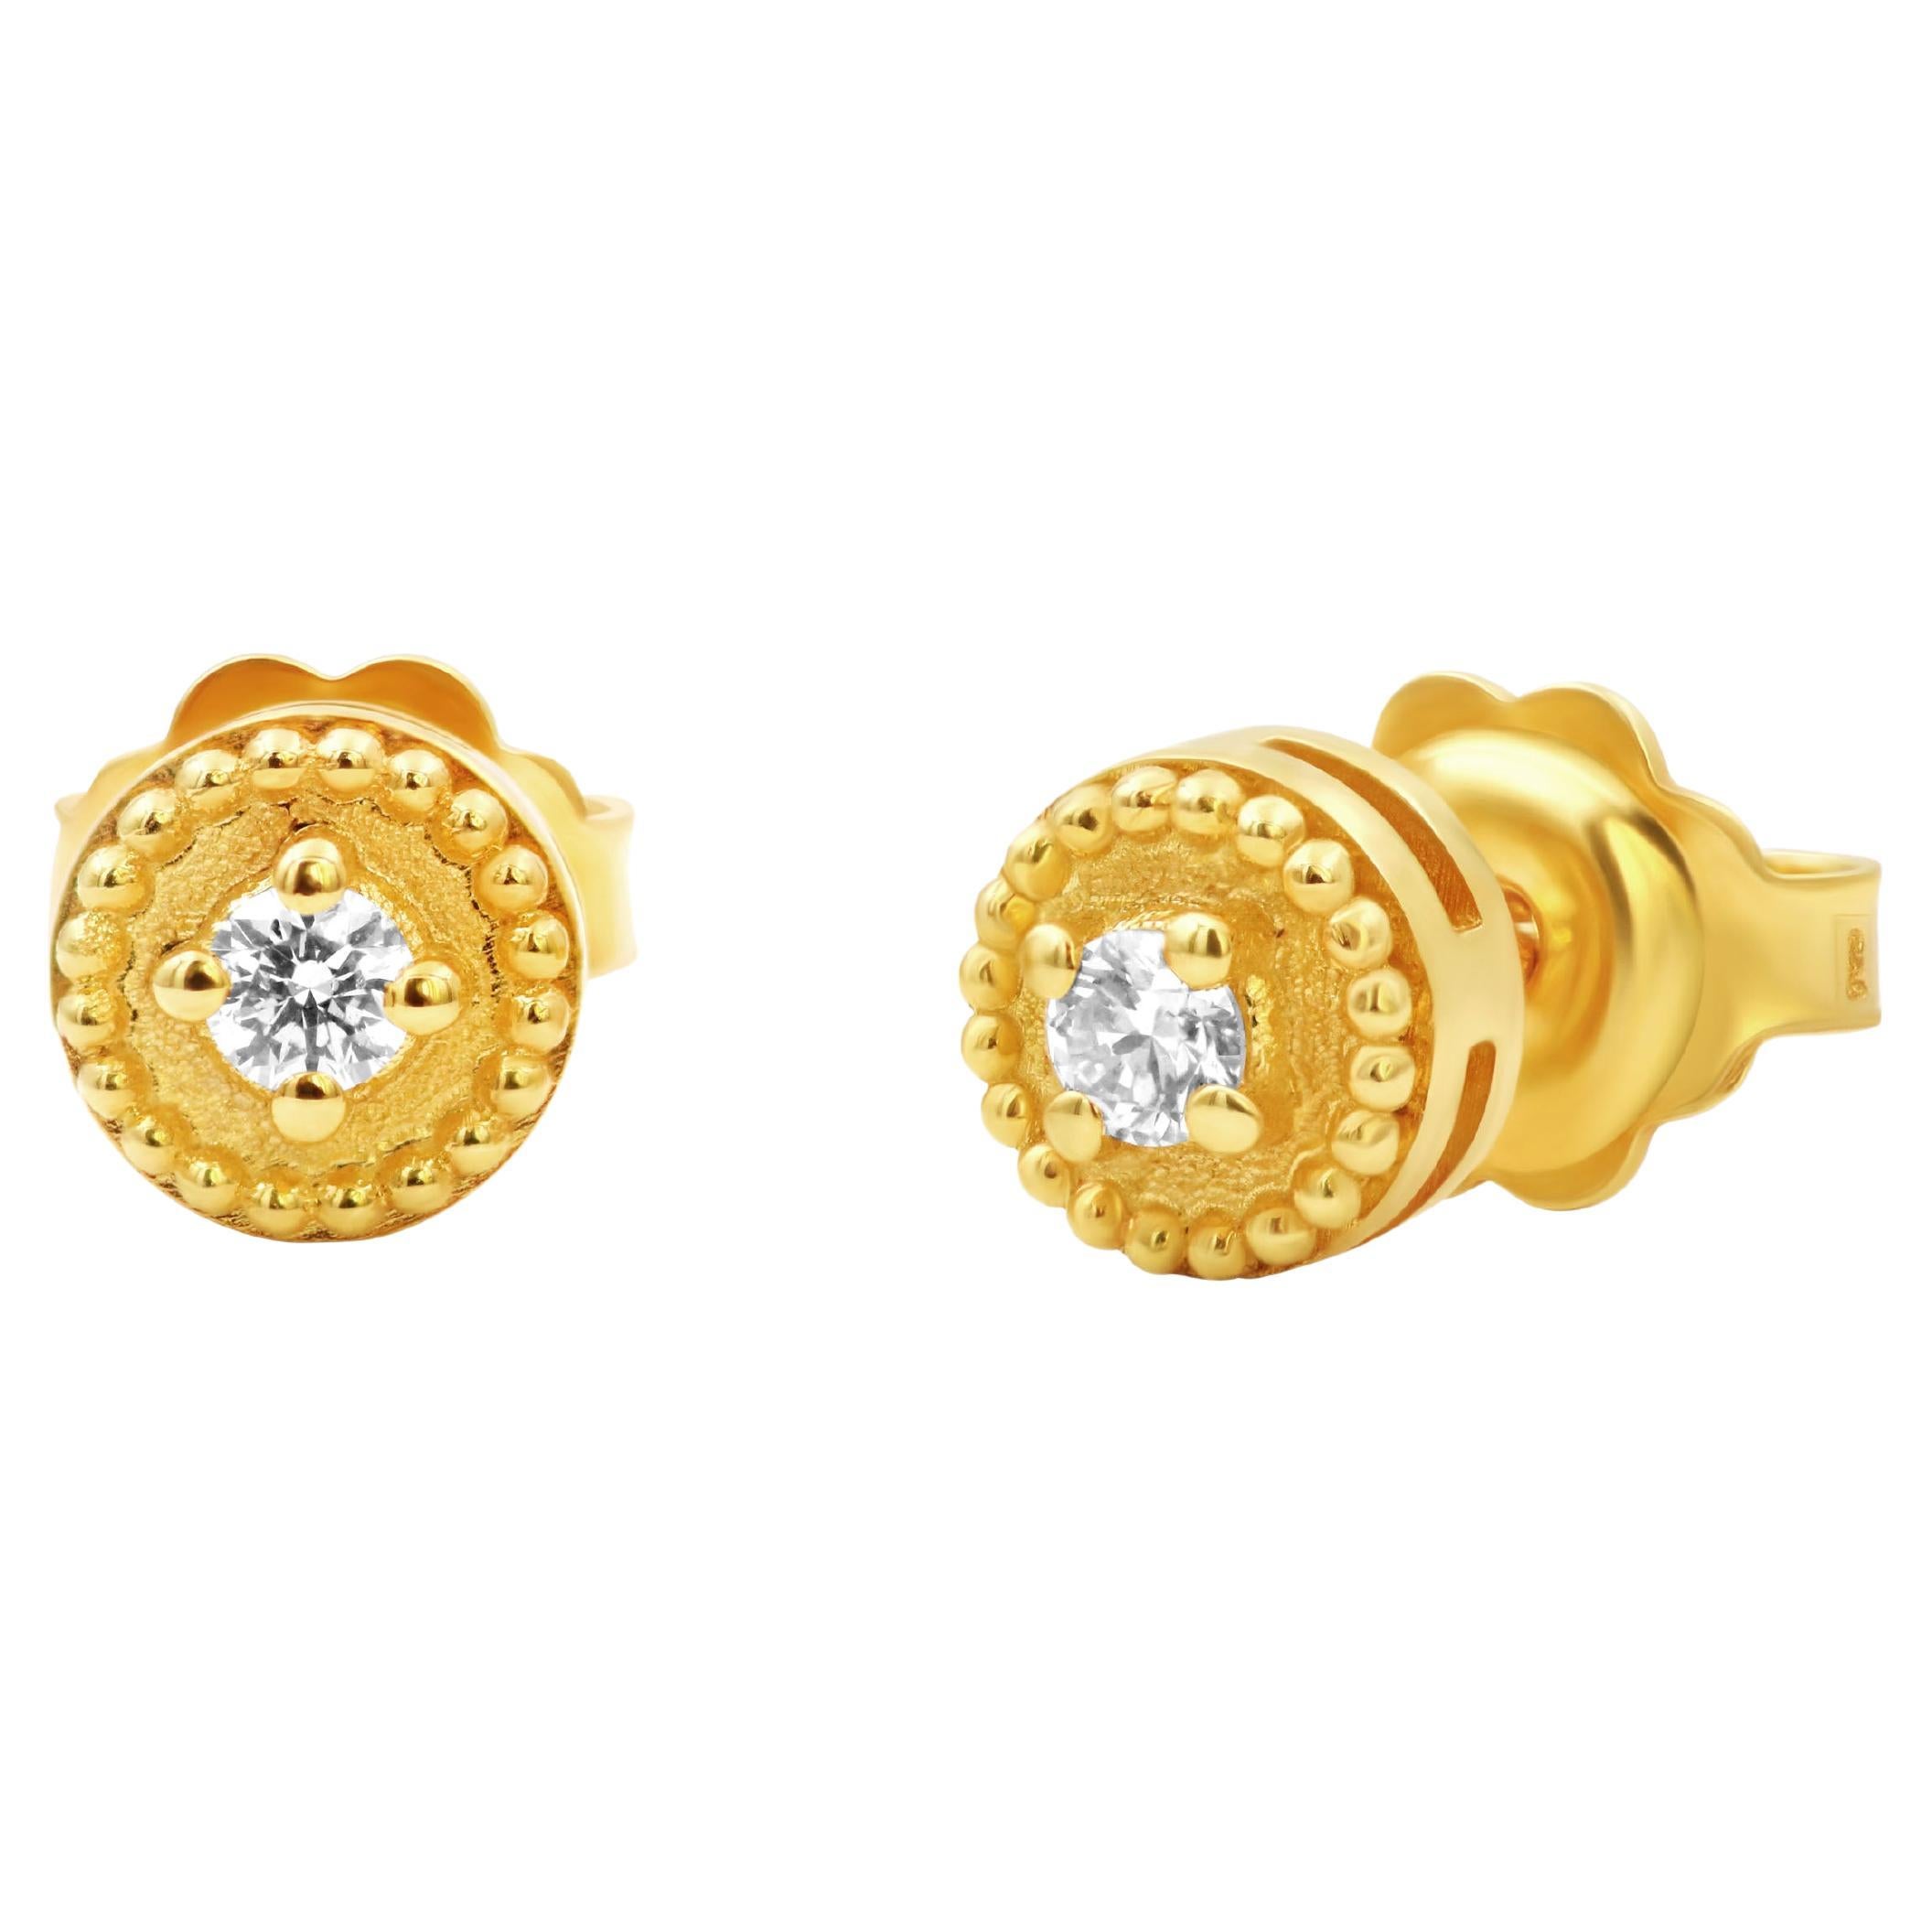 Dimos 18k Gold Balance Stud Earrings with Diamonds